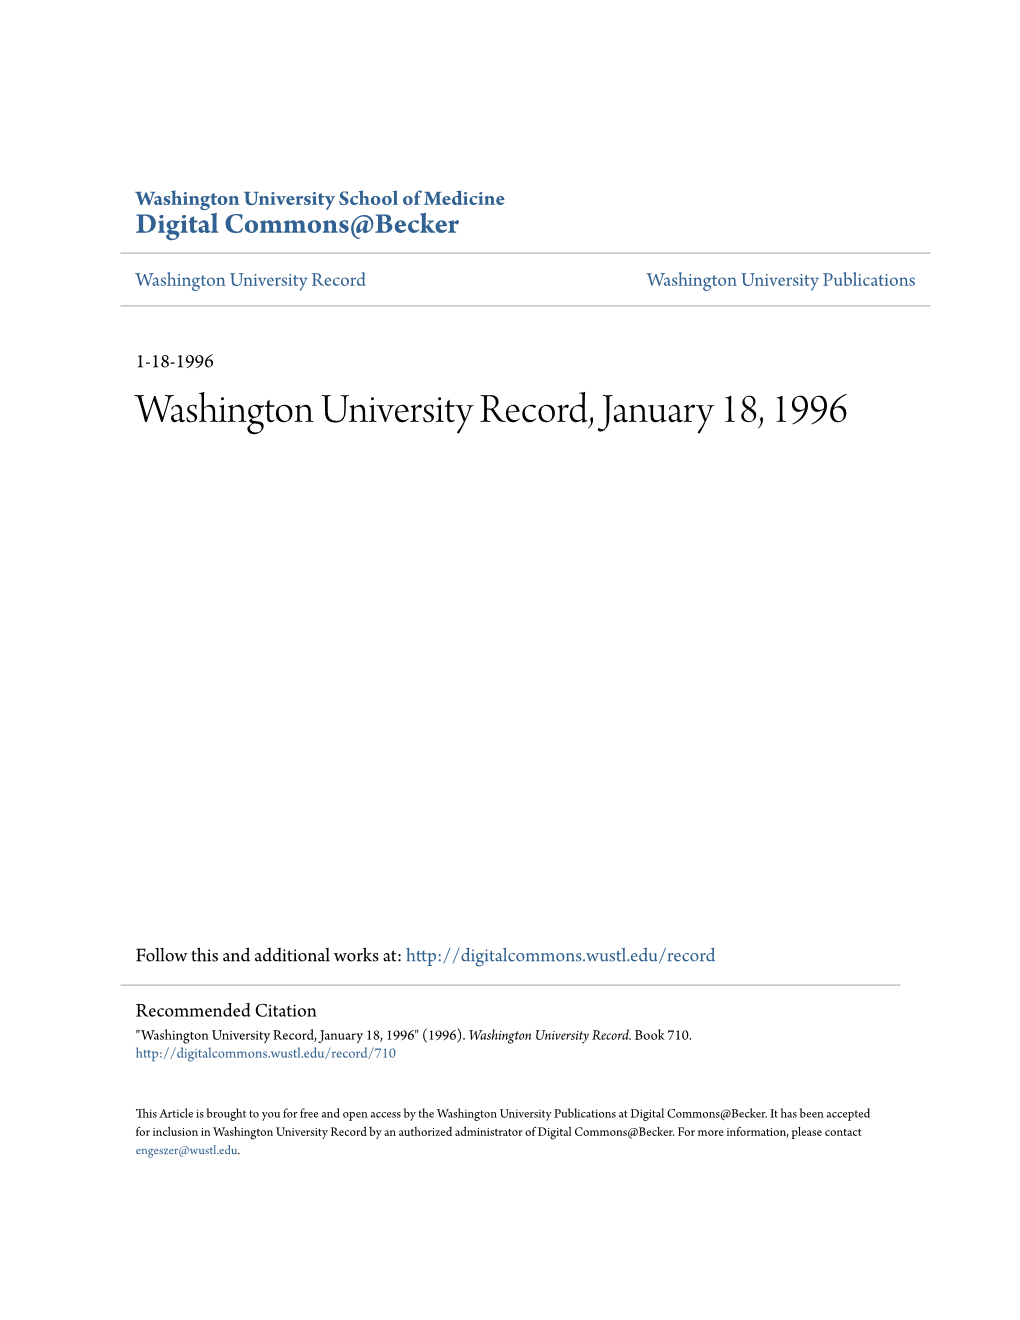 Washington University Record, January 18, 1996